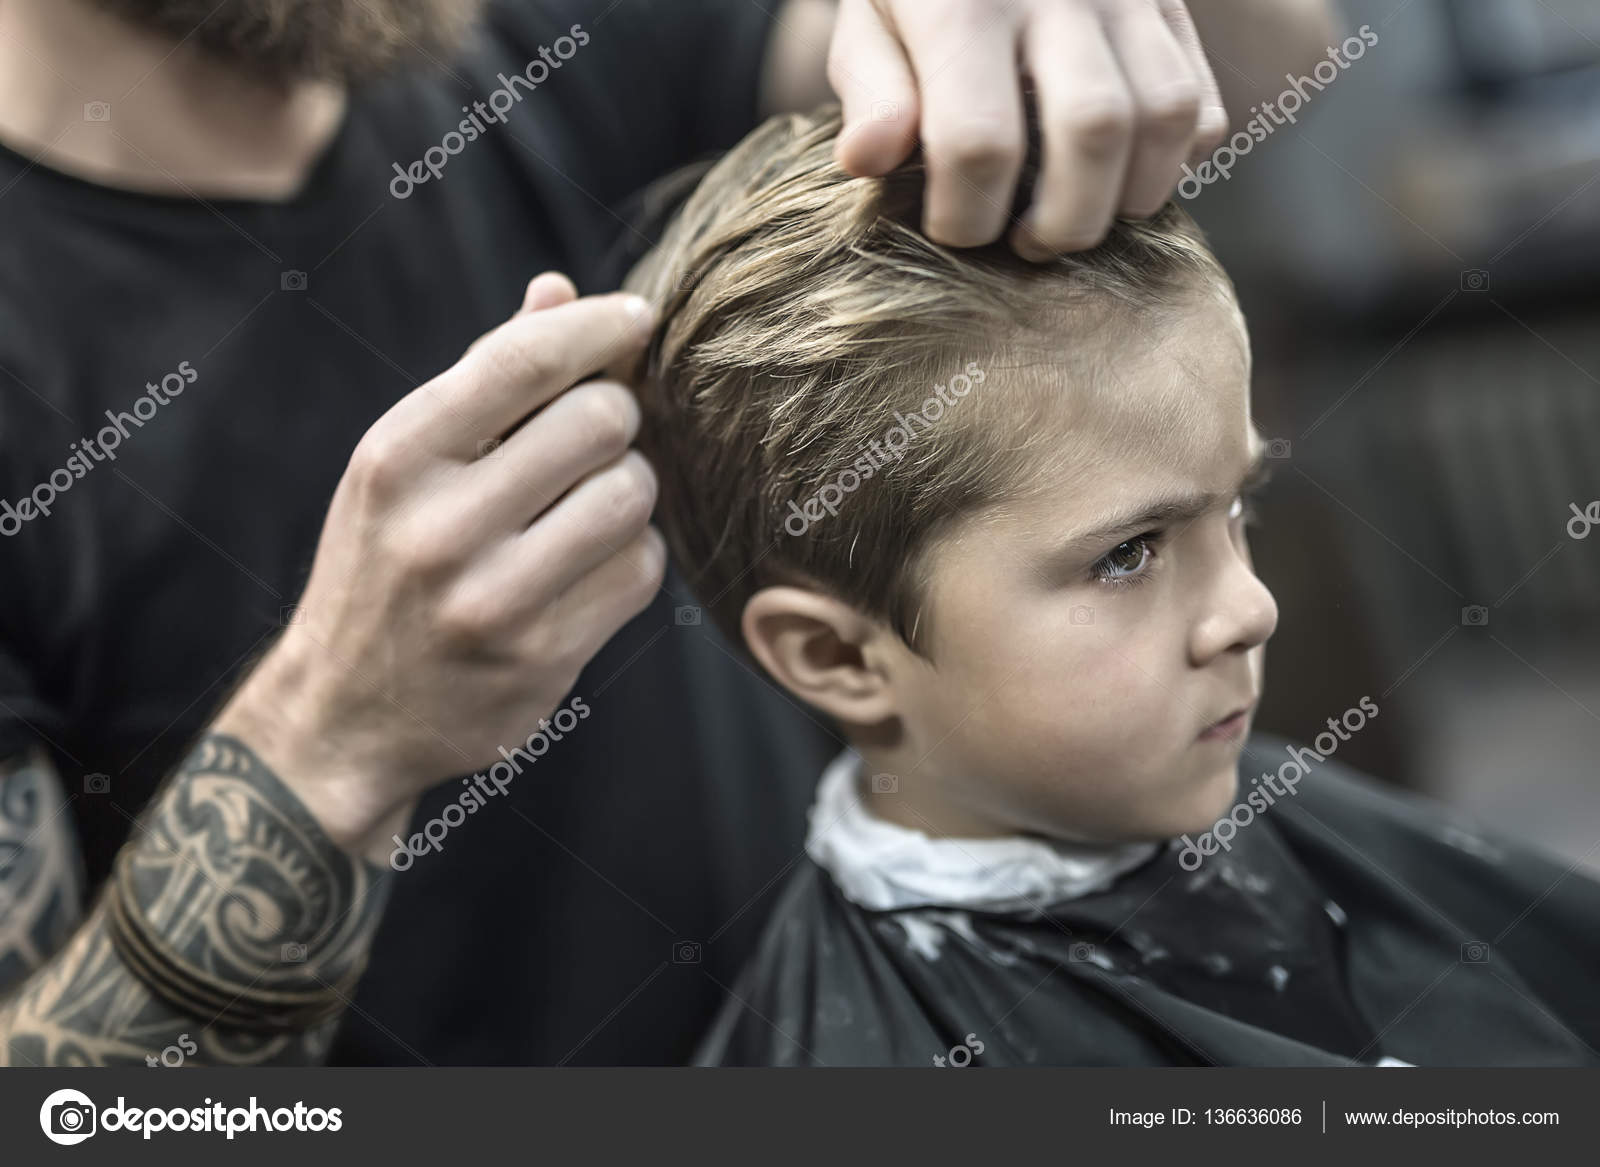 Kids hair styling in barbershop Stock Photo by ©bezikus 136636086